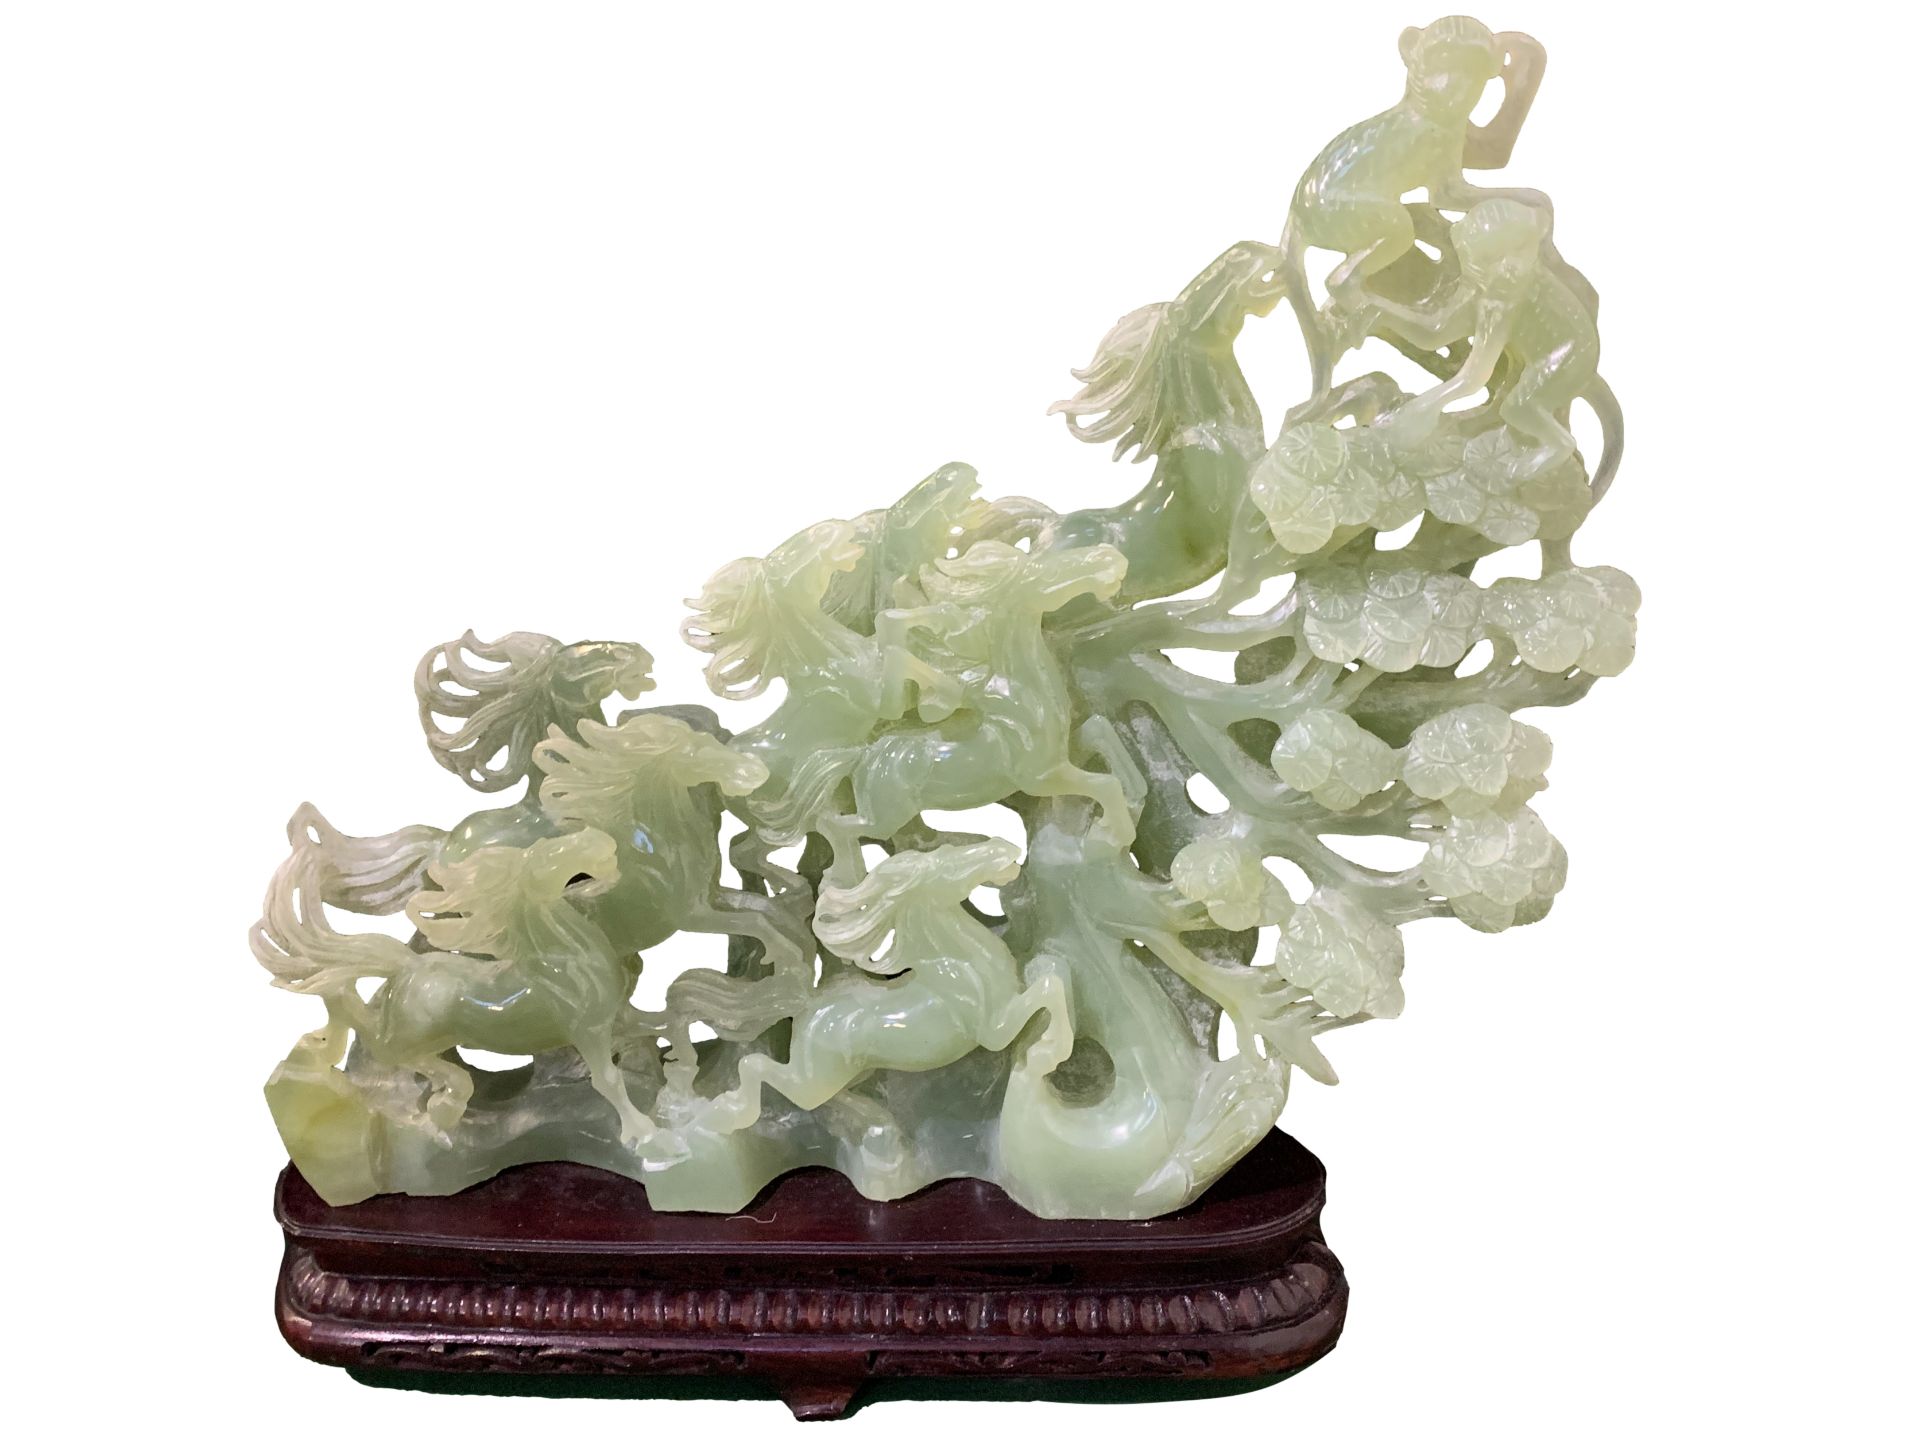 Jade carving of the eight horses of the Emperor Mu Wang